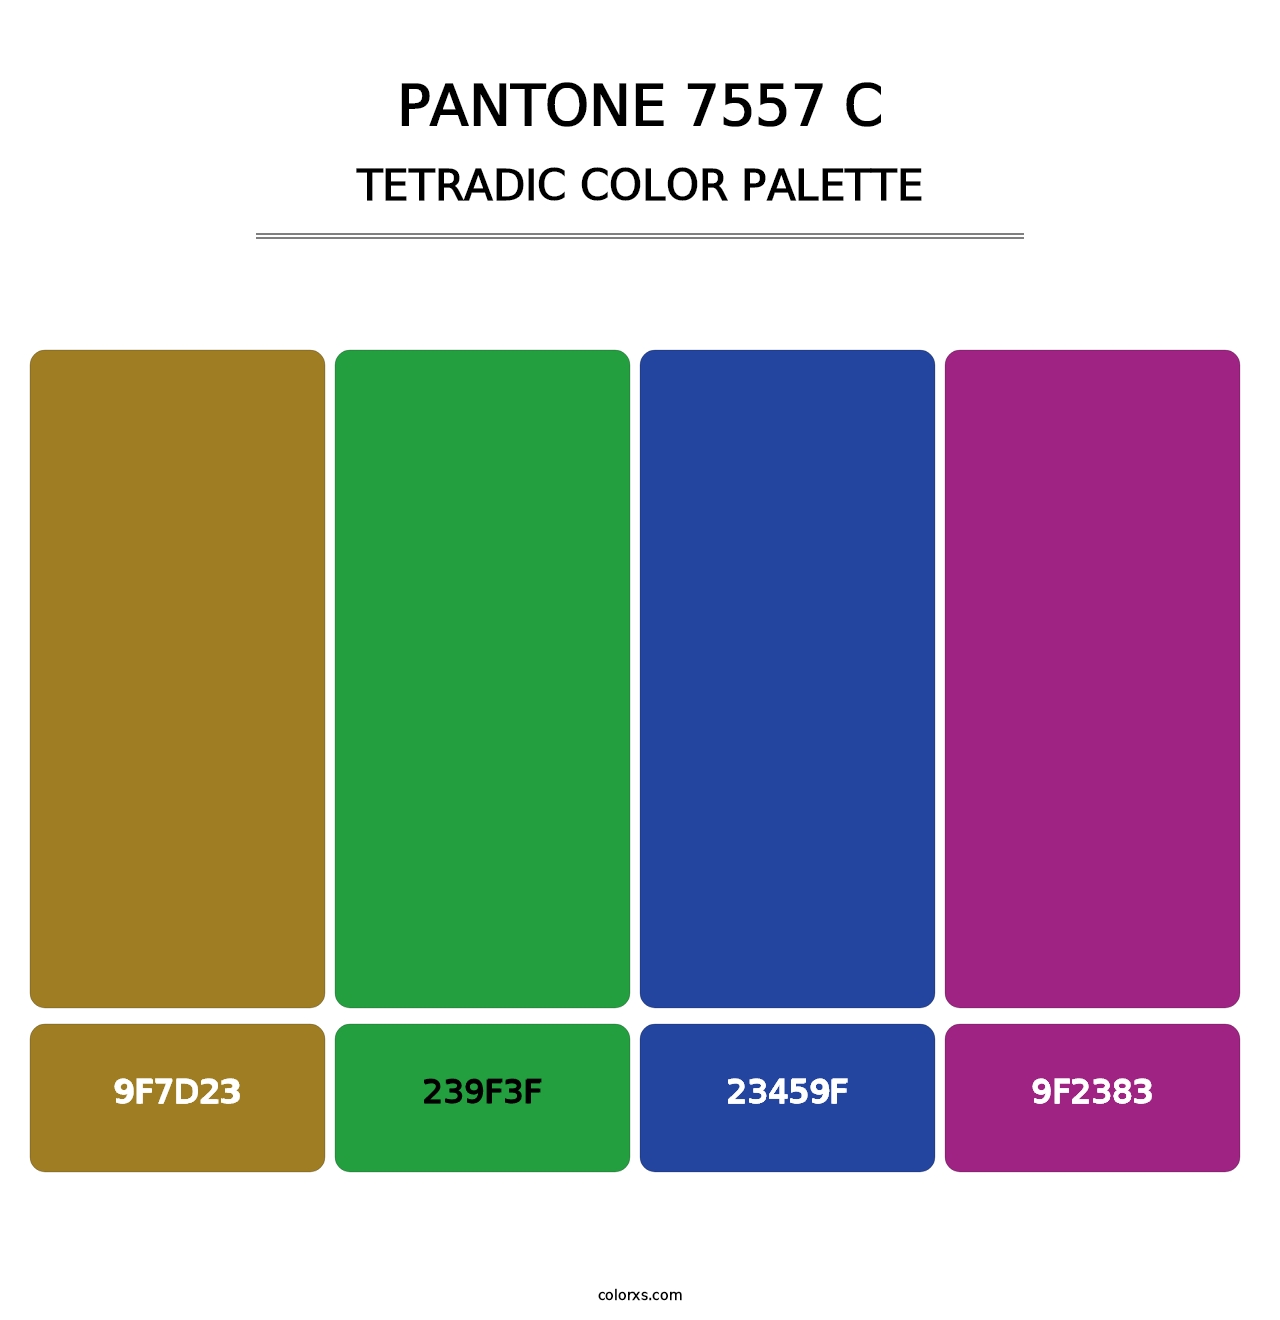 PANTONE 7557 C - Tetradic Color Palette